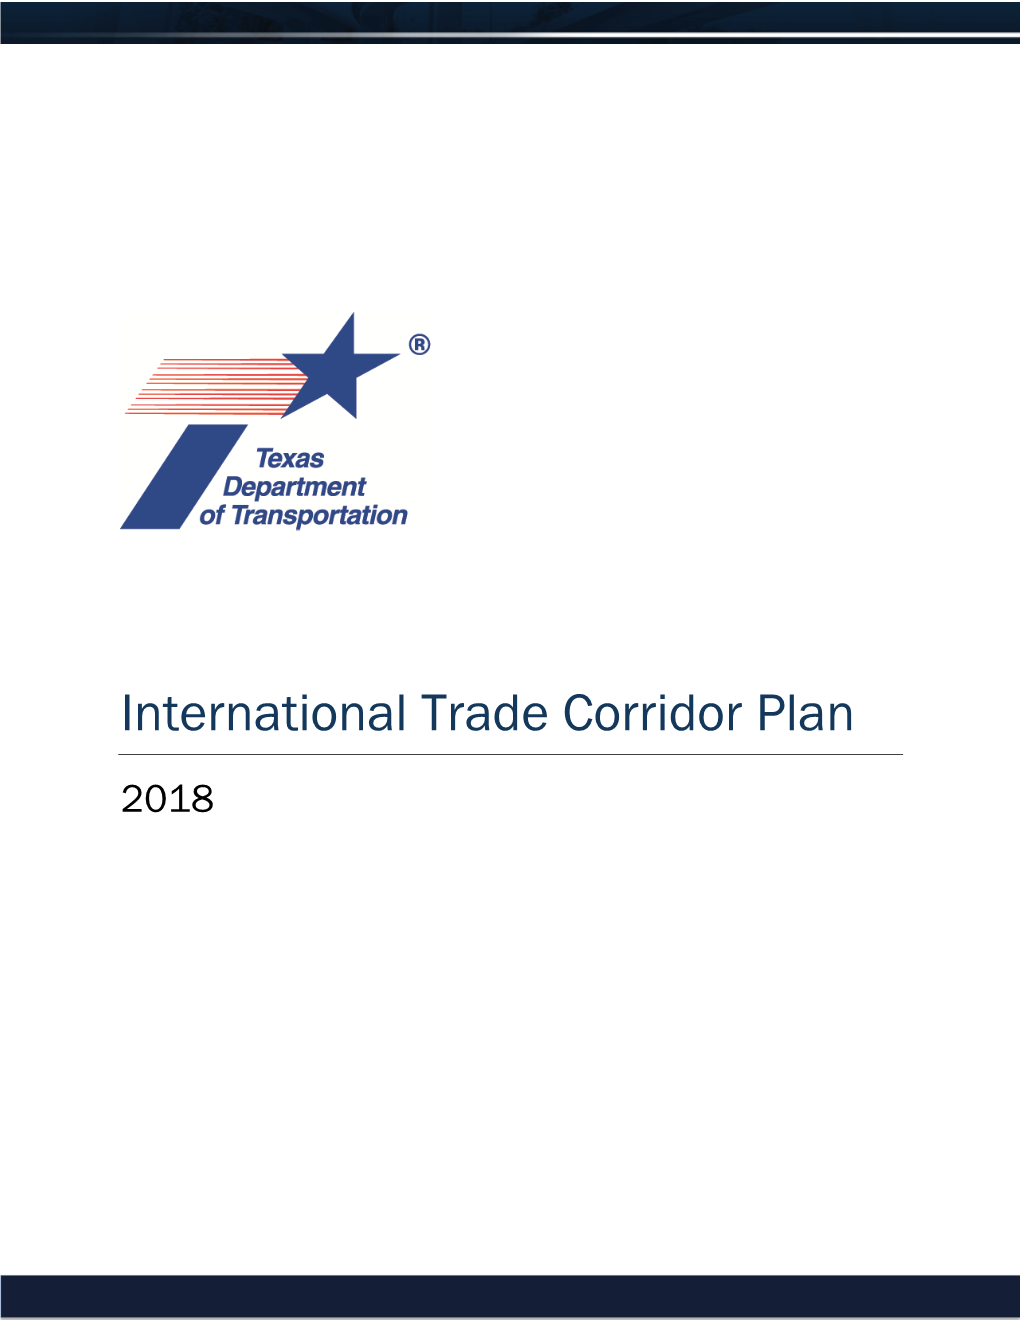 International Trade Corridor Plan 2018